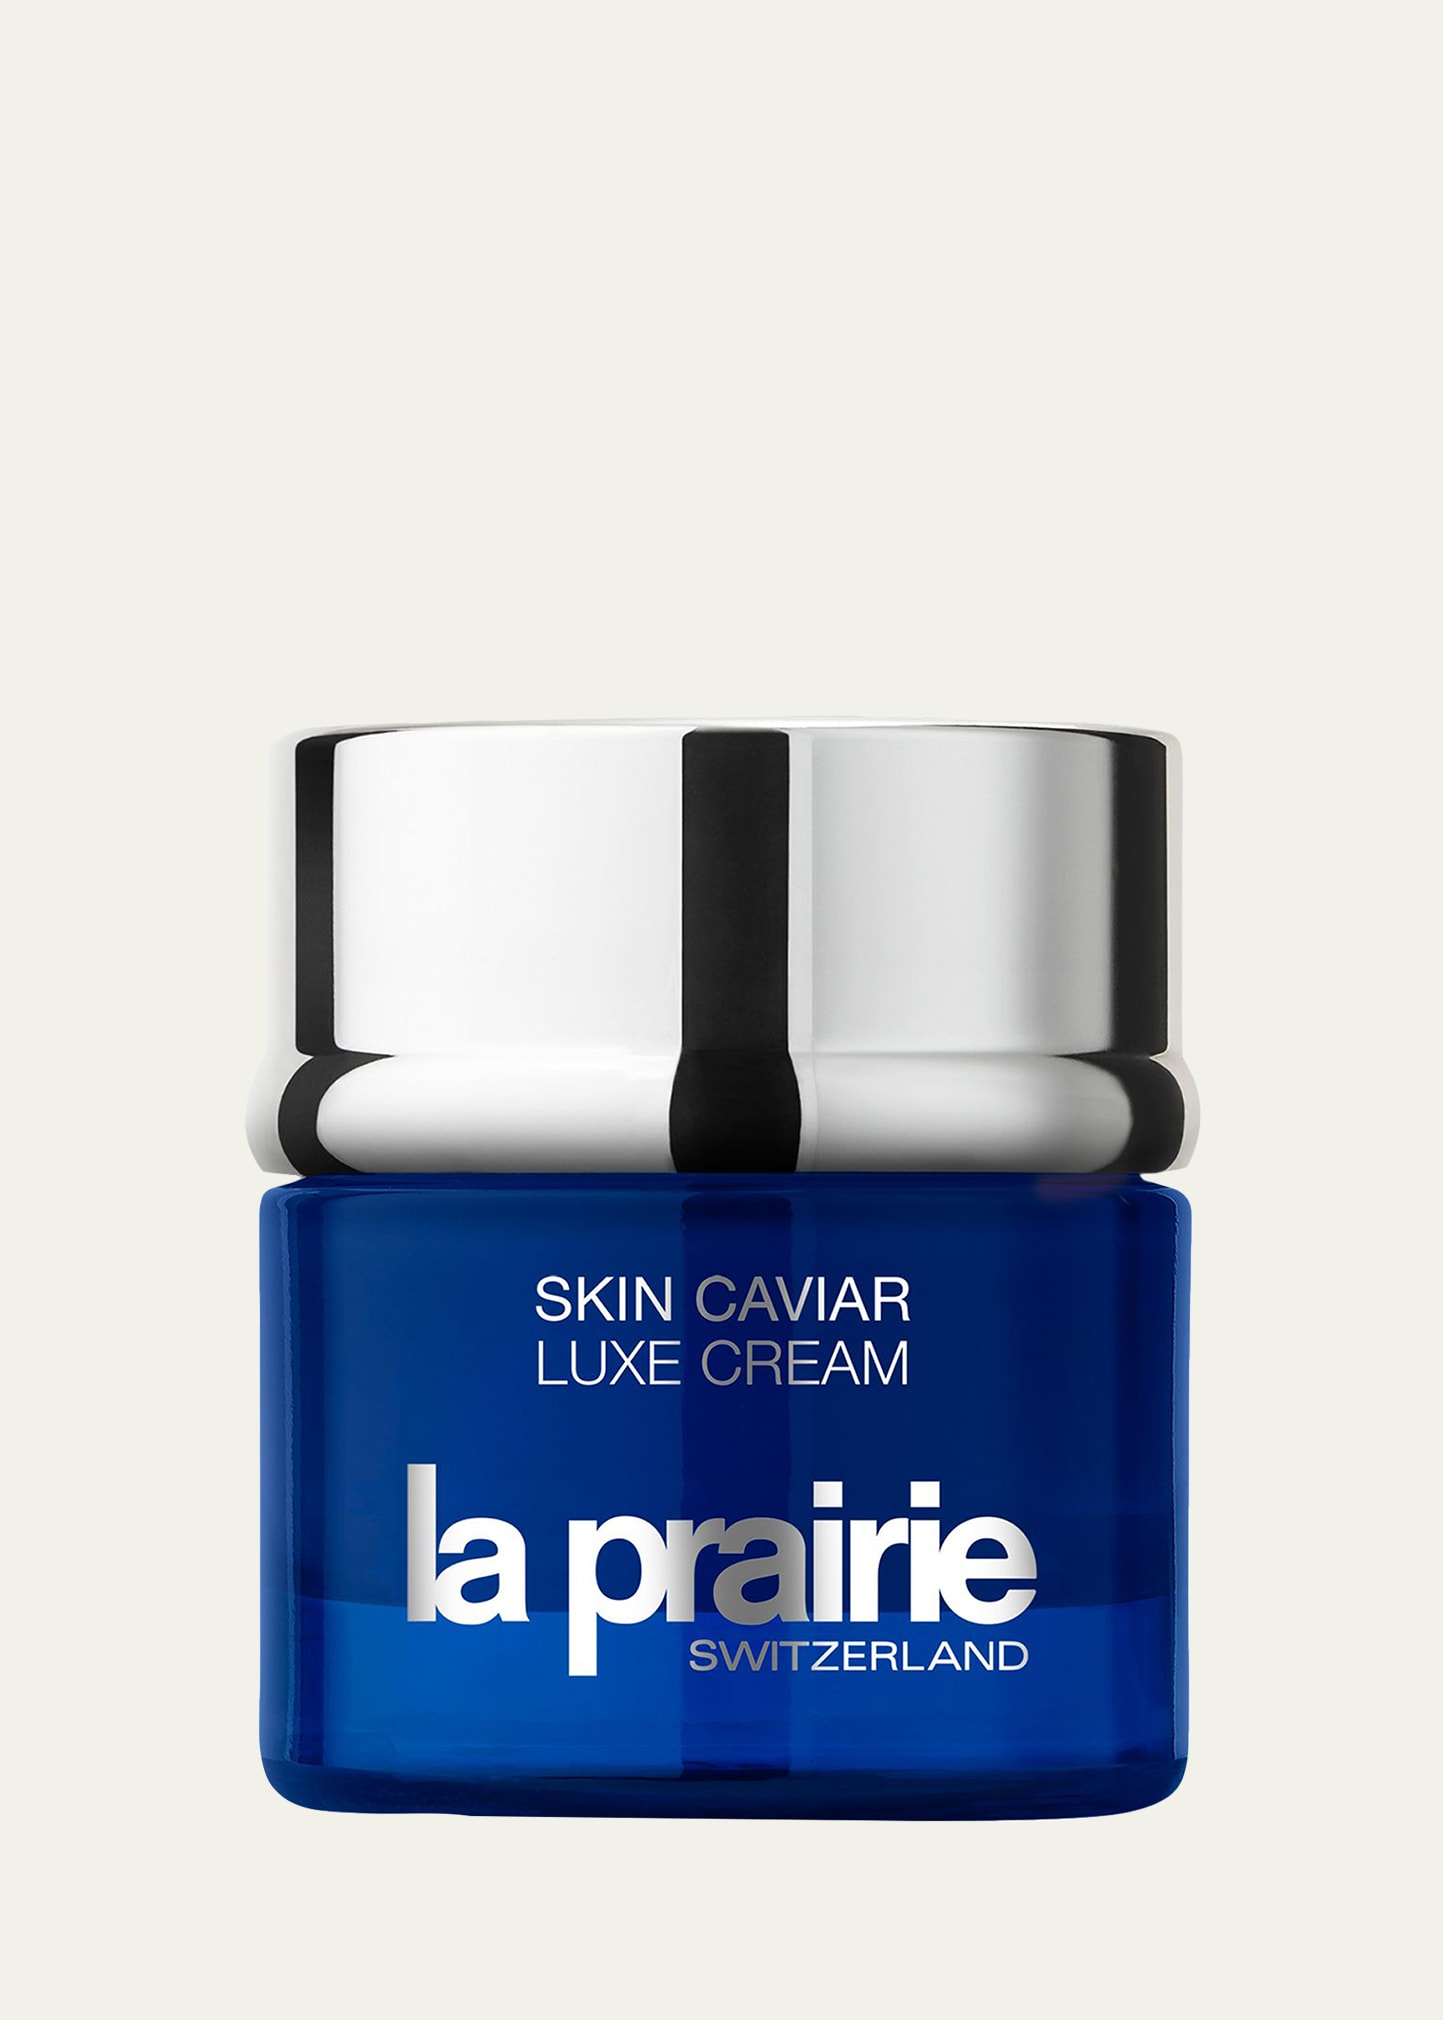 La Prairie Skin Caviar Luxe Cream, 1.7 oz.